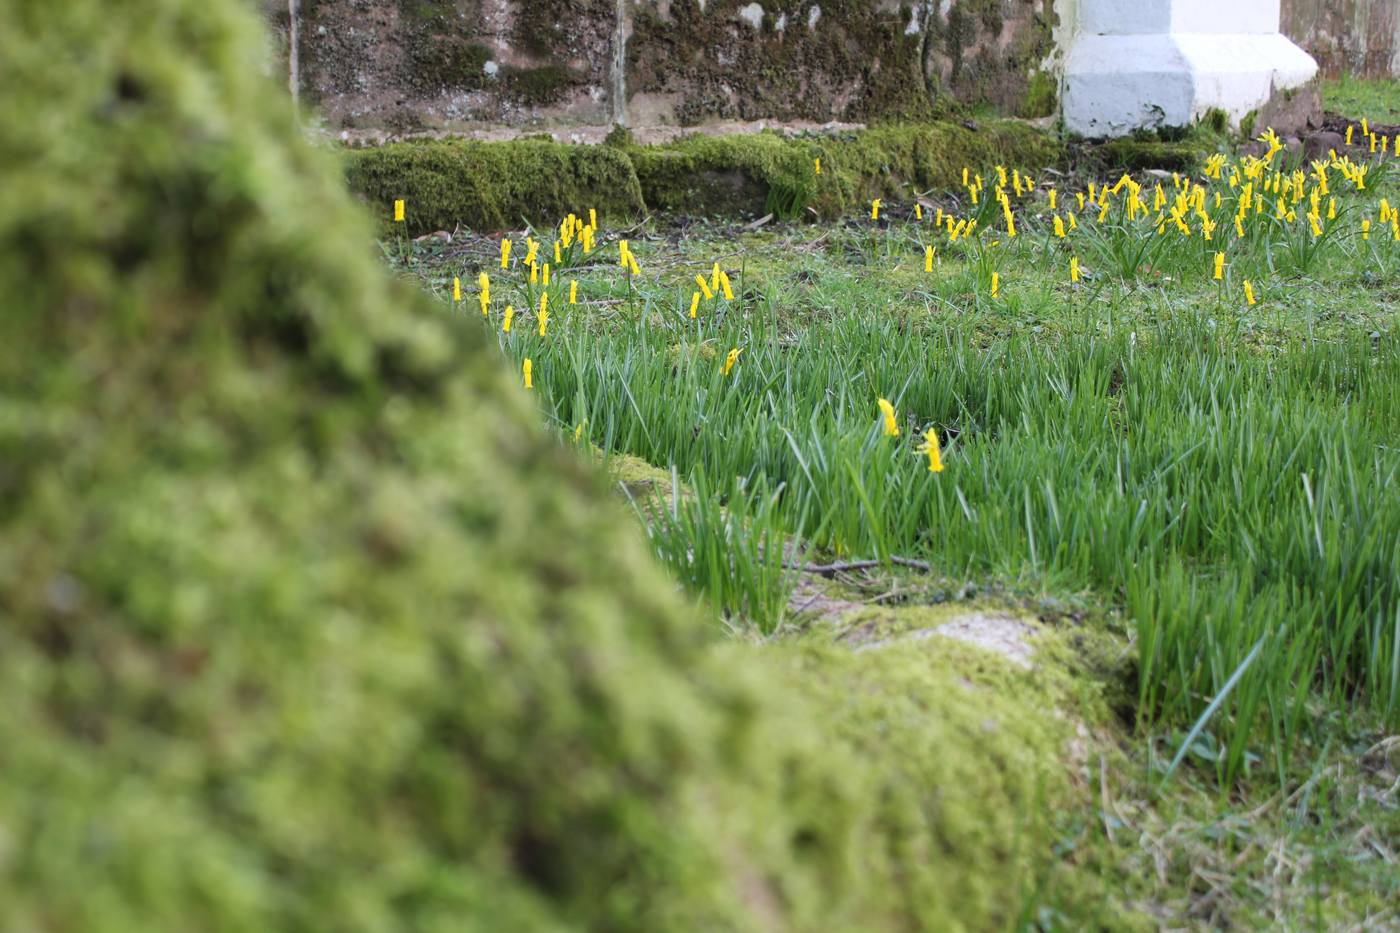 Daffodils at Cholmondeley Gardens